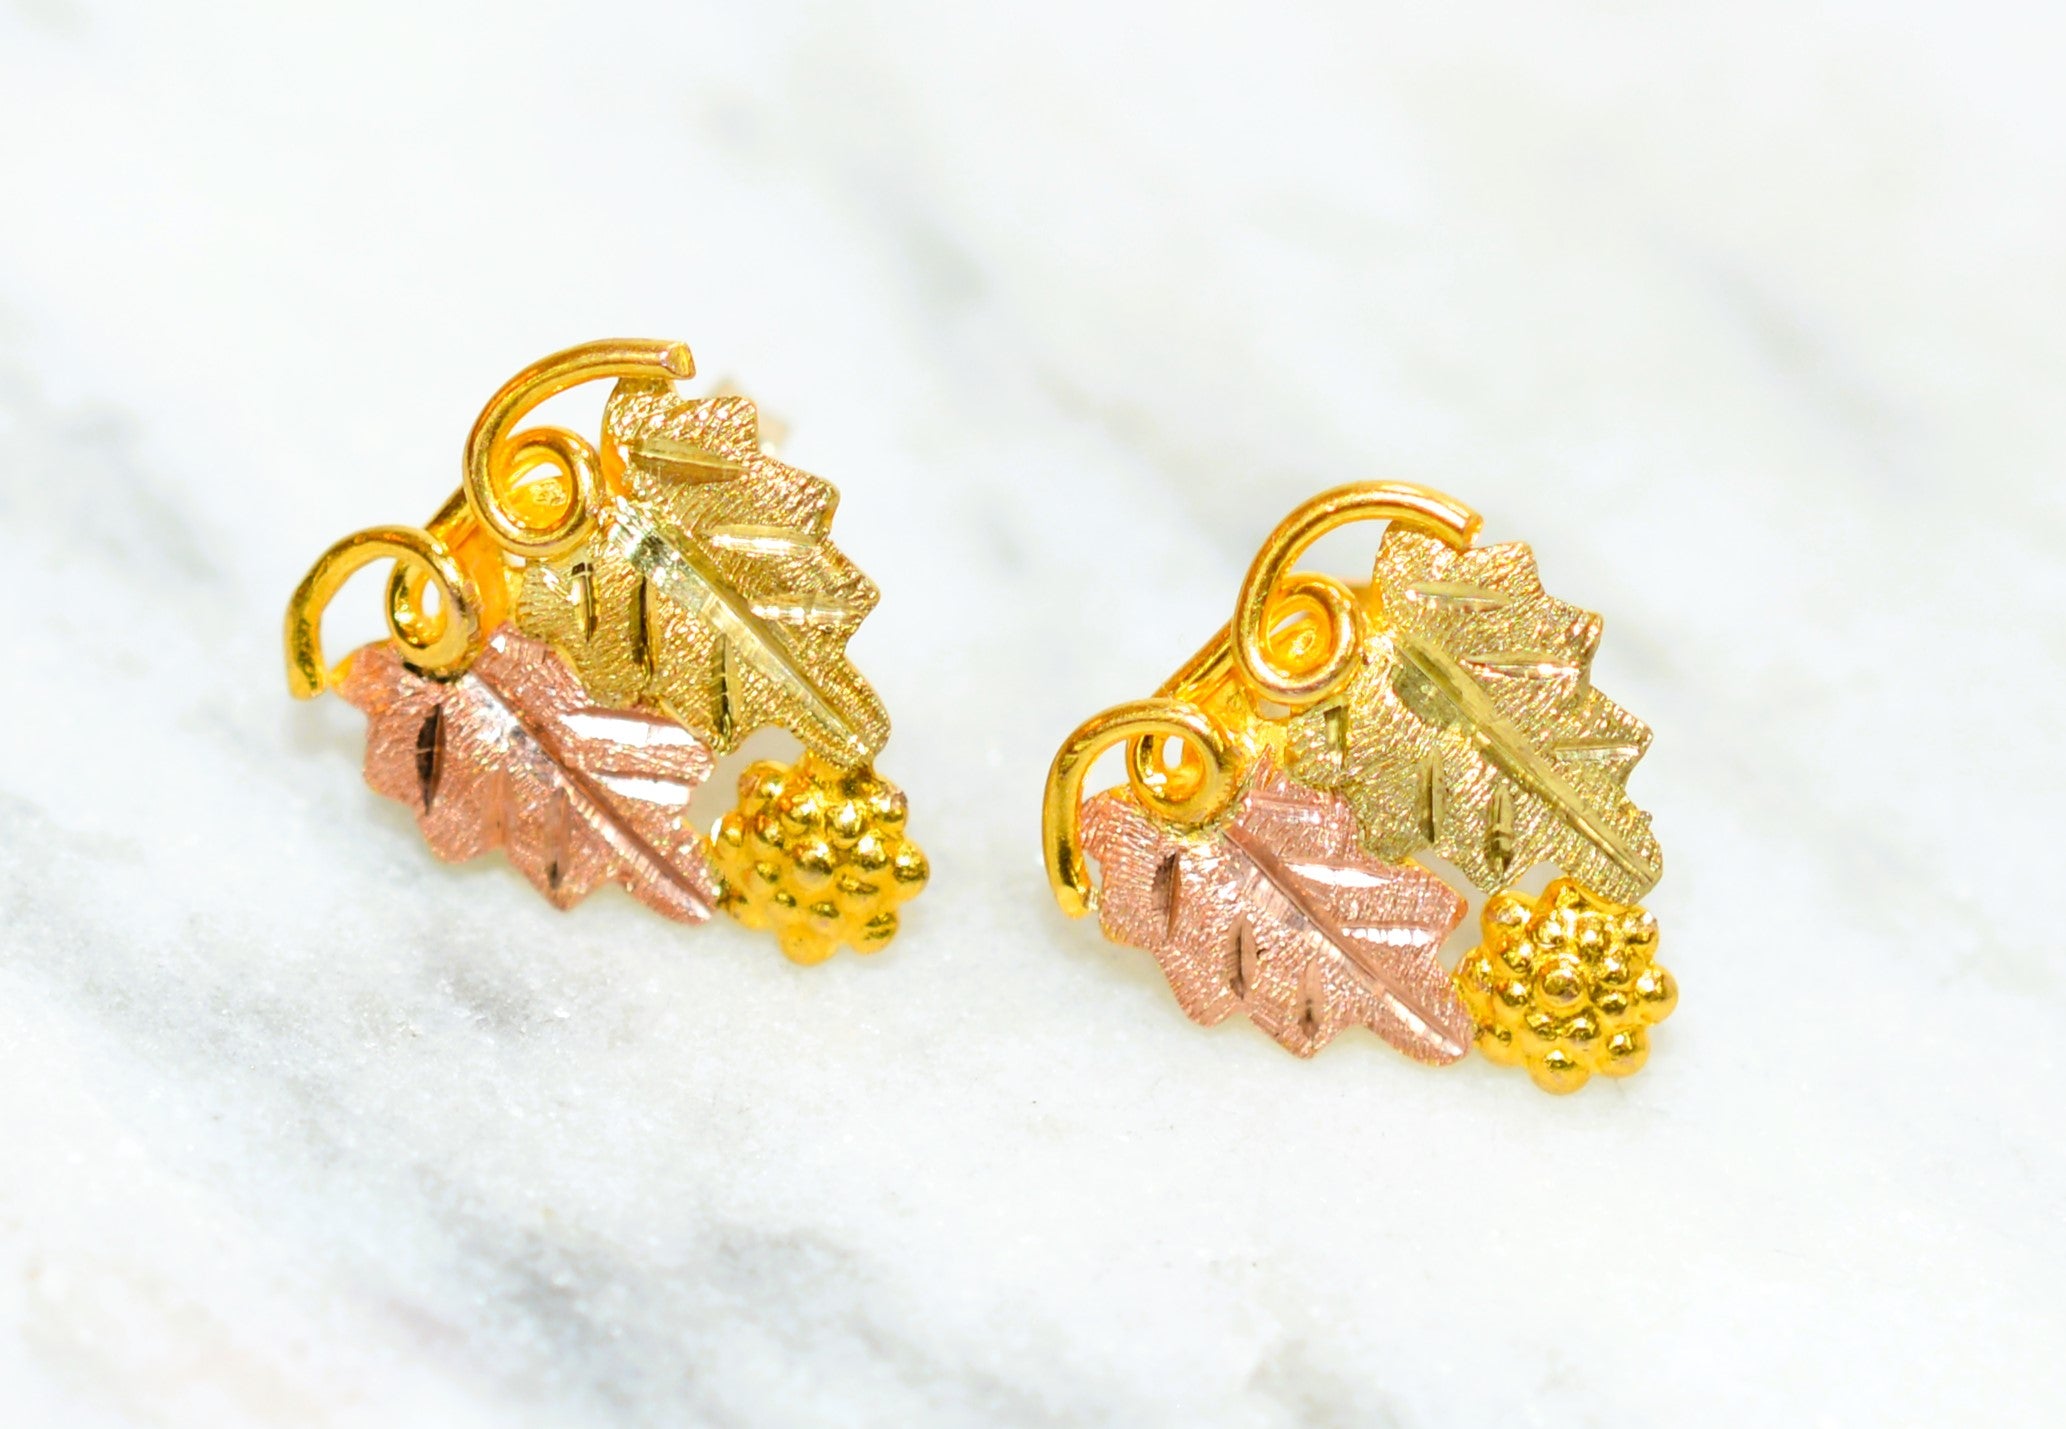 Black Hills Gold Earrings 10K Solid Gold Grape Leaf Earrings Tri-Color Gold Earrings South Dakota Gold Stud Earrings American USA Vintage